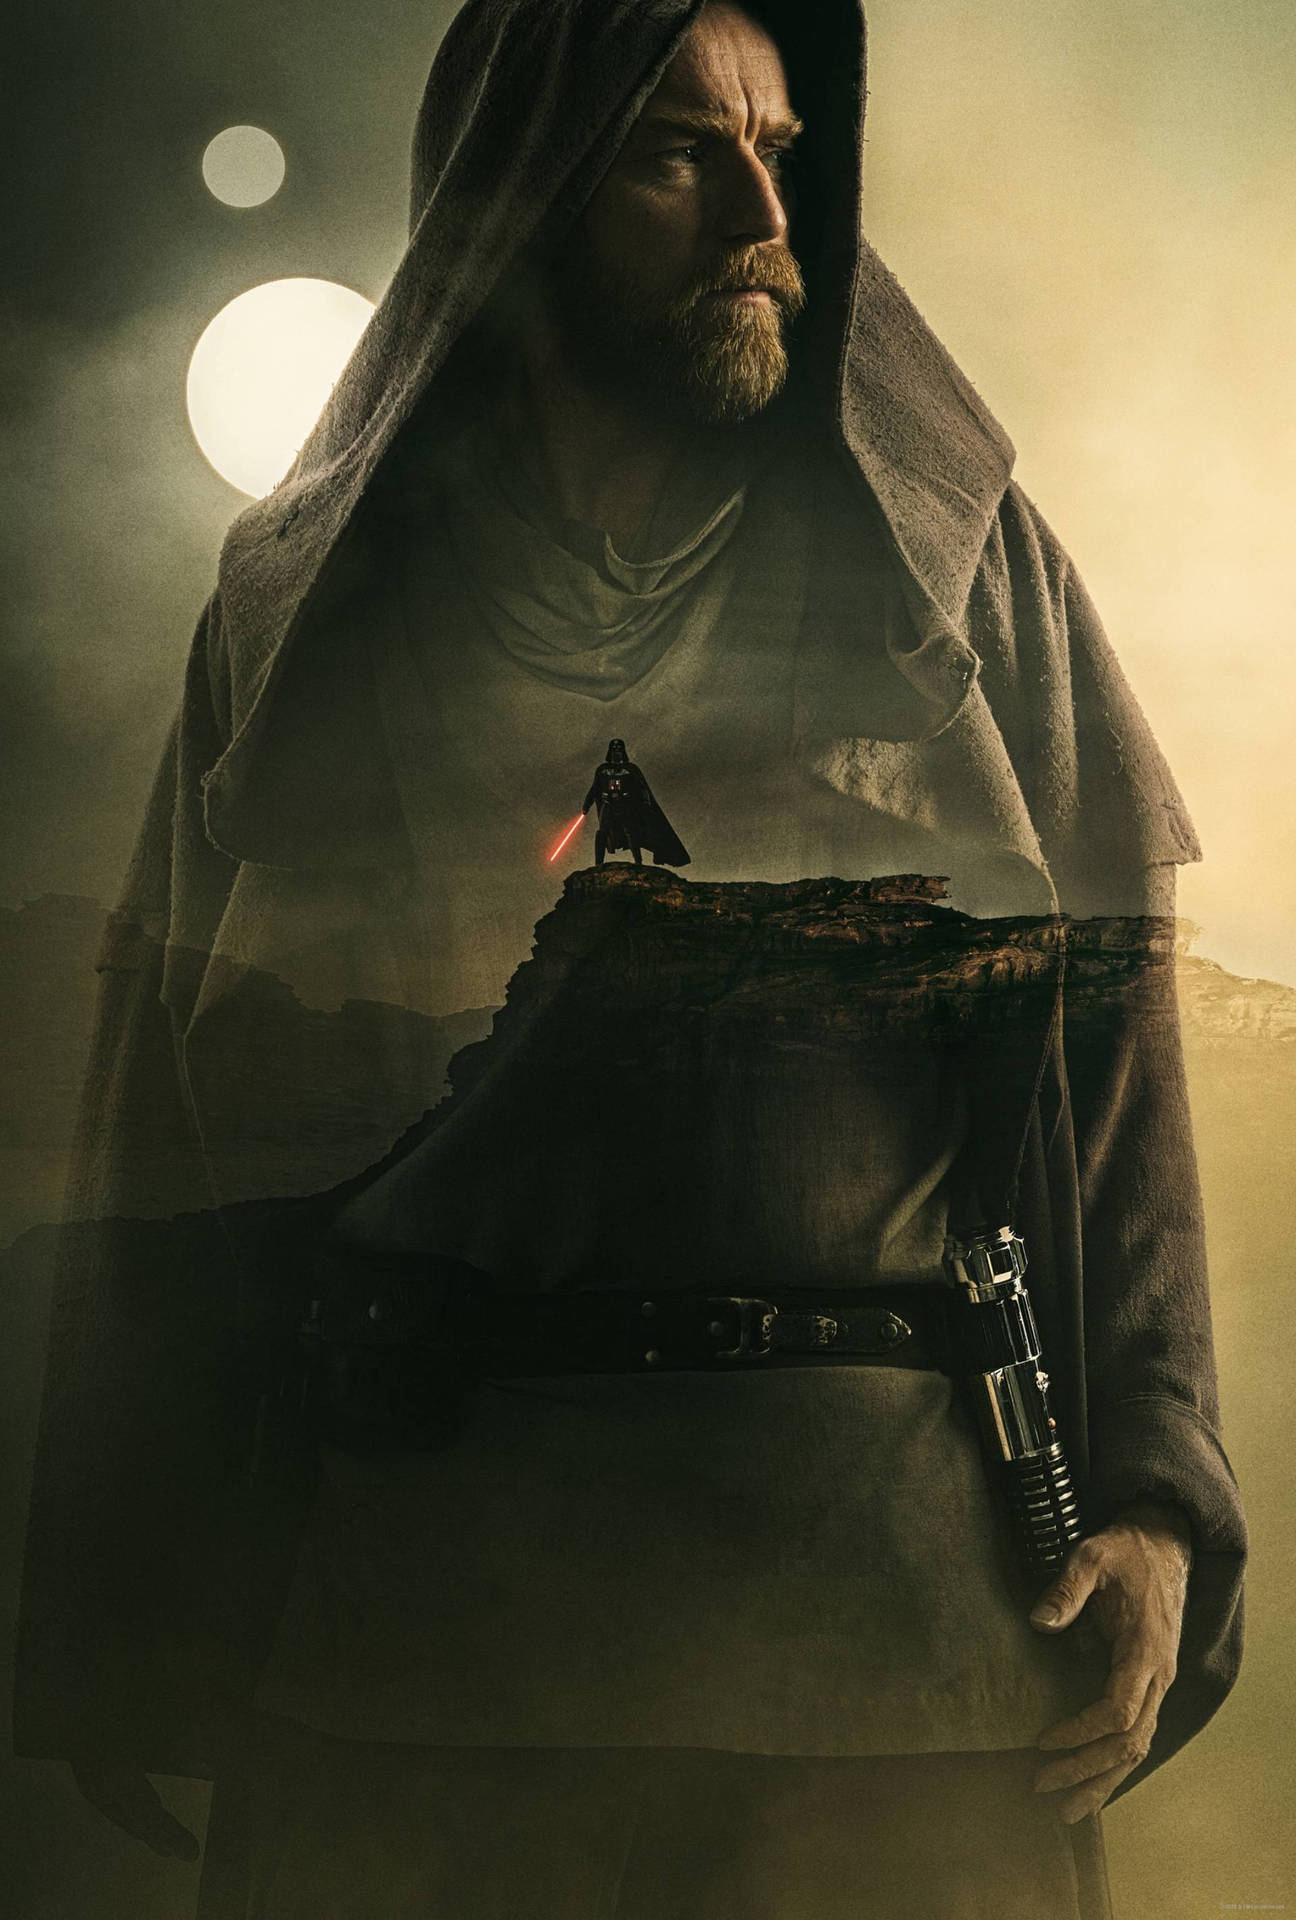 Obi Wan Kenobi Double-exposure Poster